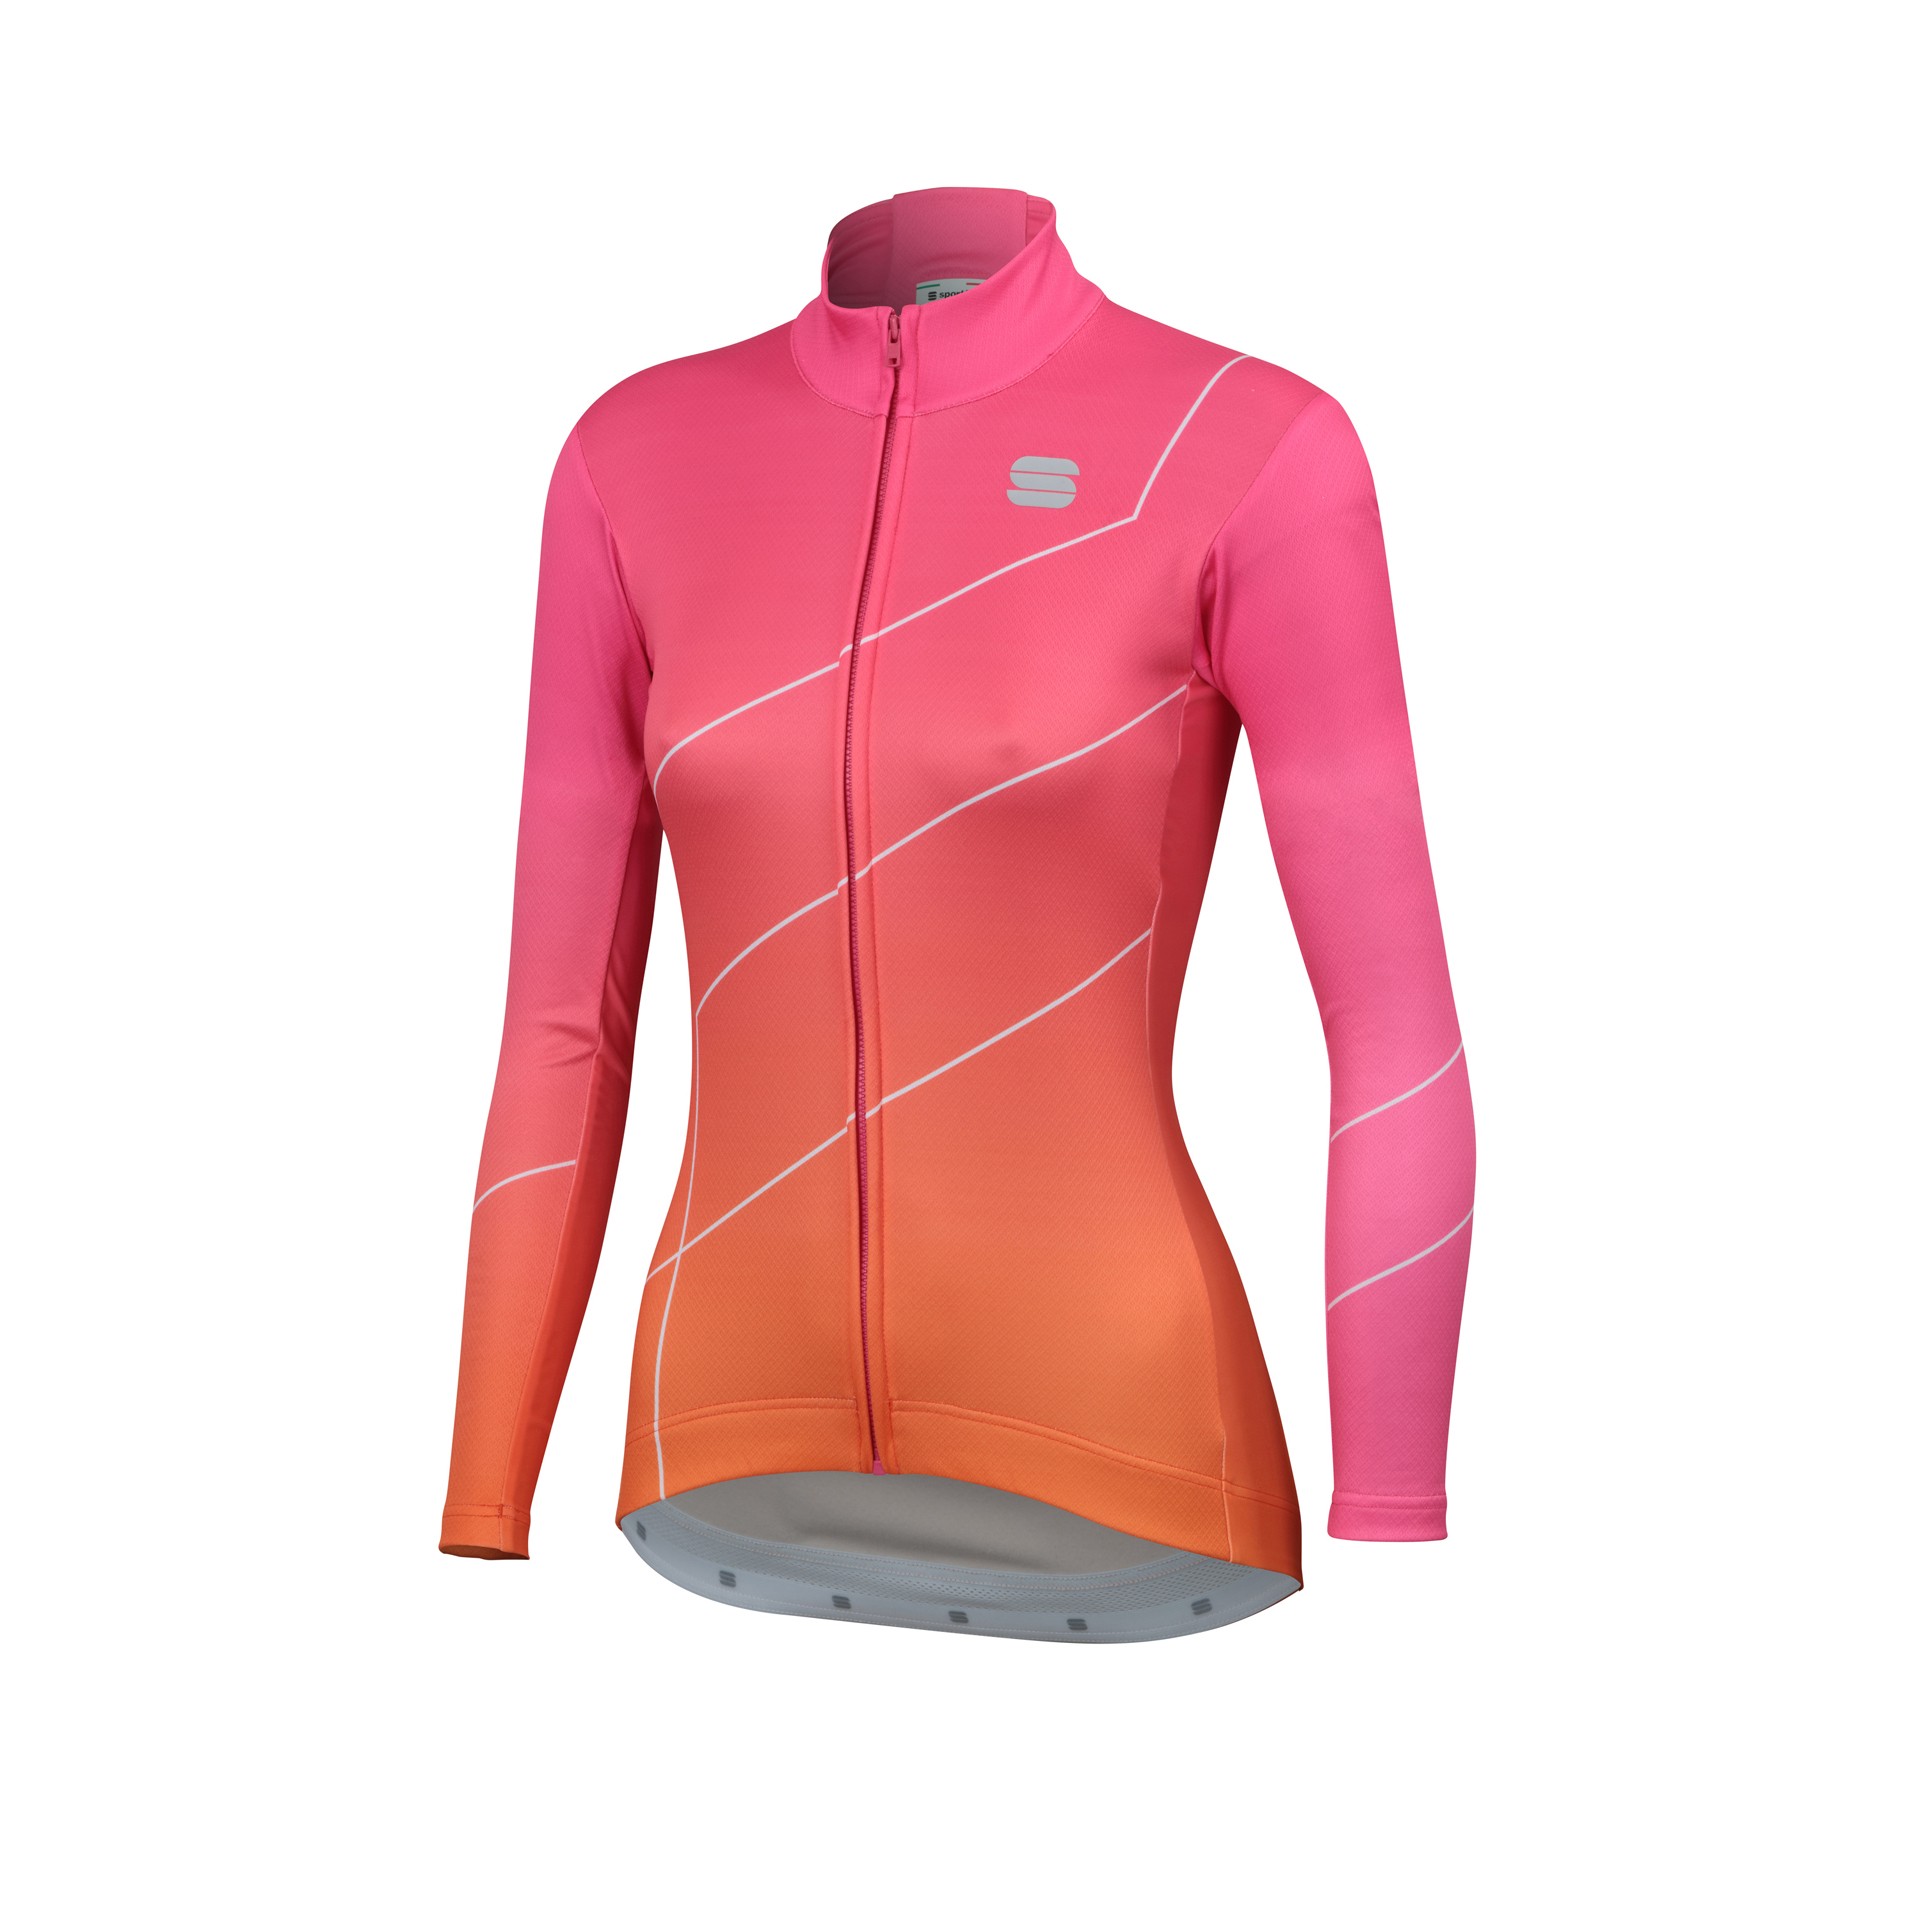 Sportful shade dames fietsshirt met lange mouwen bubbel gum roze oranje sdr